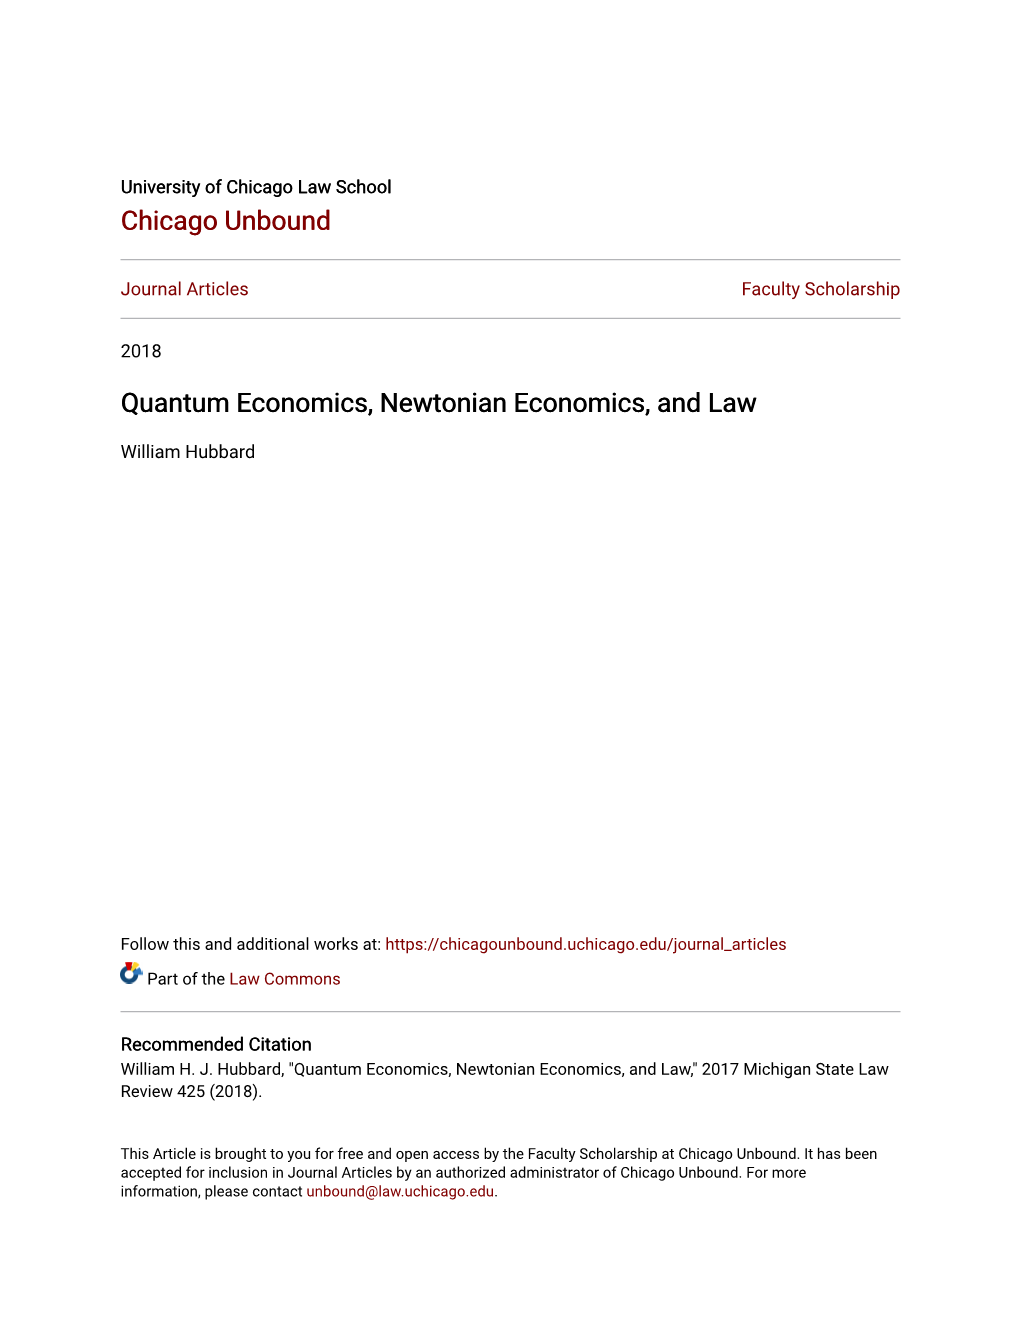 Quantum Economics, Newtonian Economics, and Law